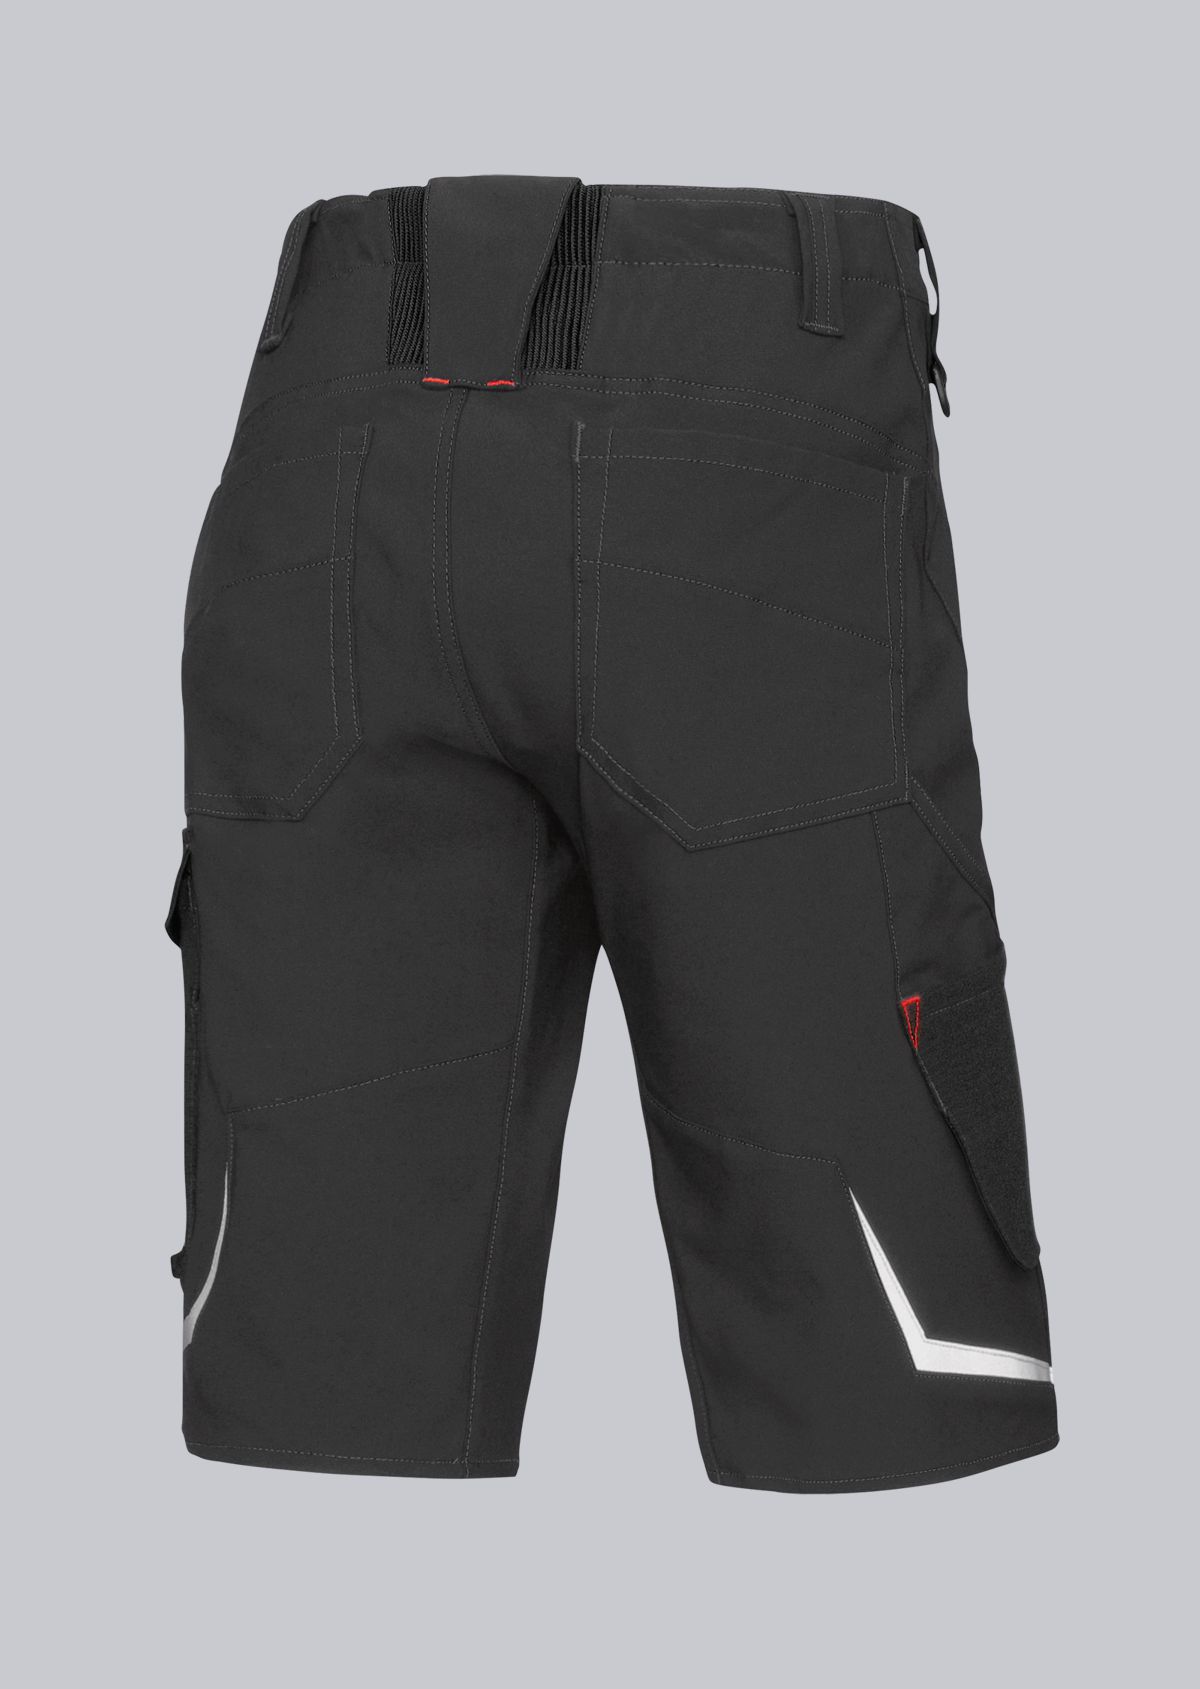 BP® Men's super-stretch shorts